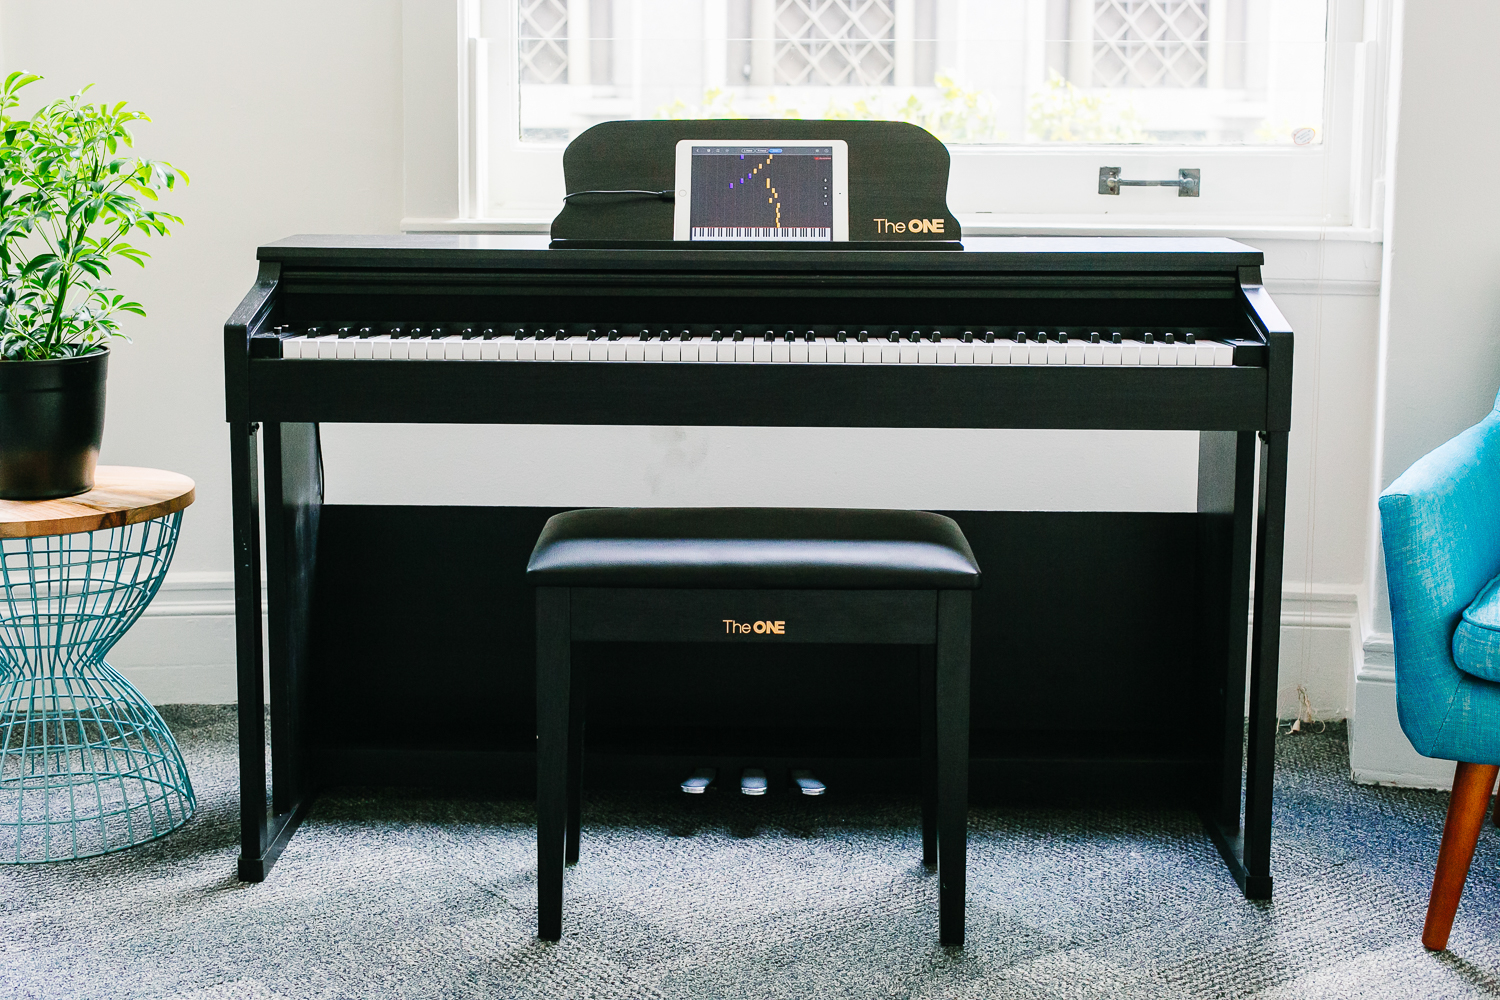 ONE Smart Piano Indiegogo